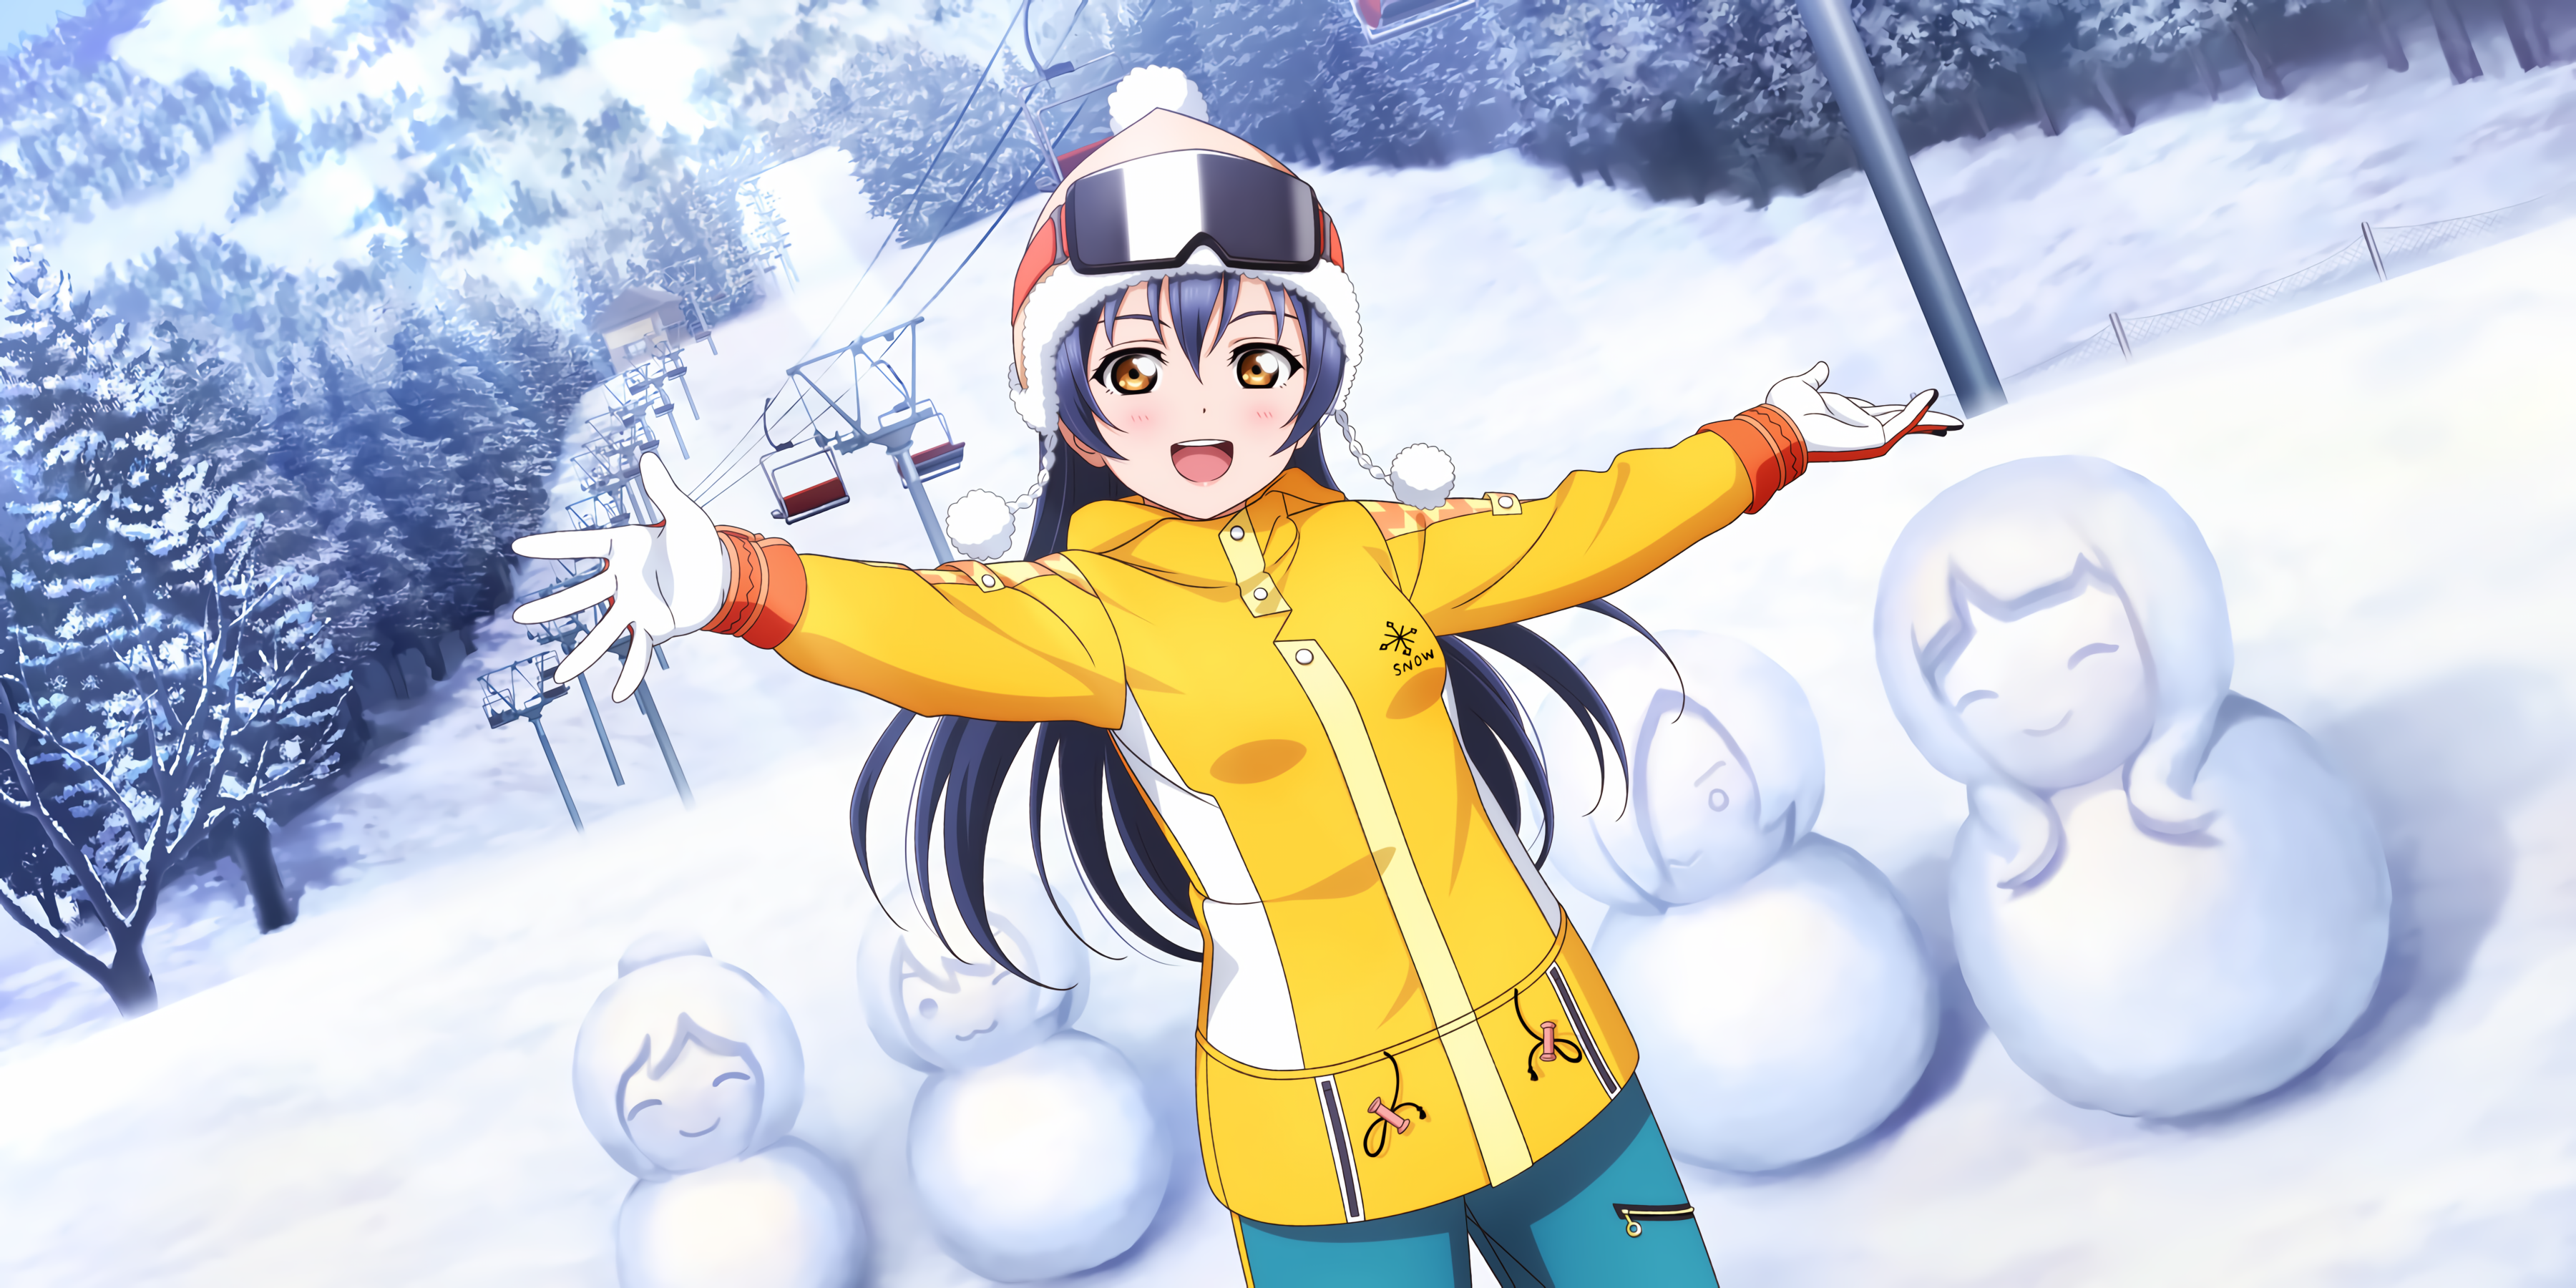 Anime 3600x1800 Sonoda Umi Love Live! anime anime girls snow snowman trees hat gloves